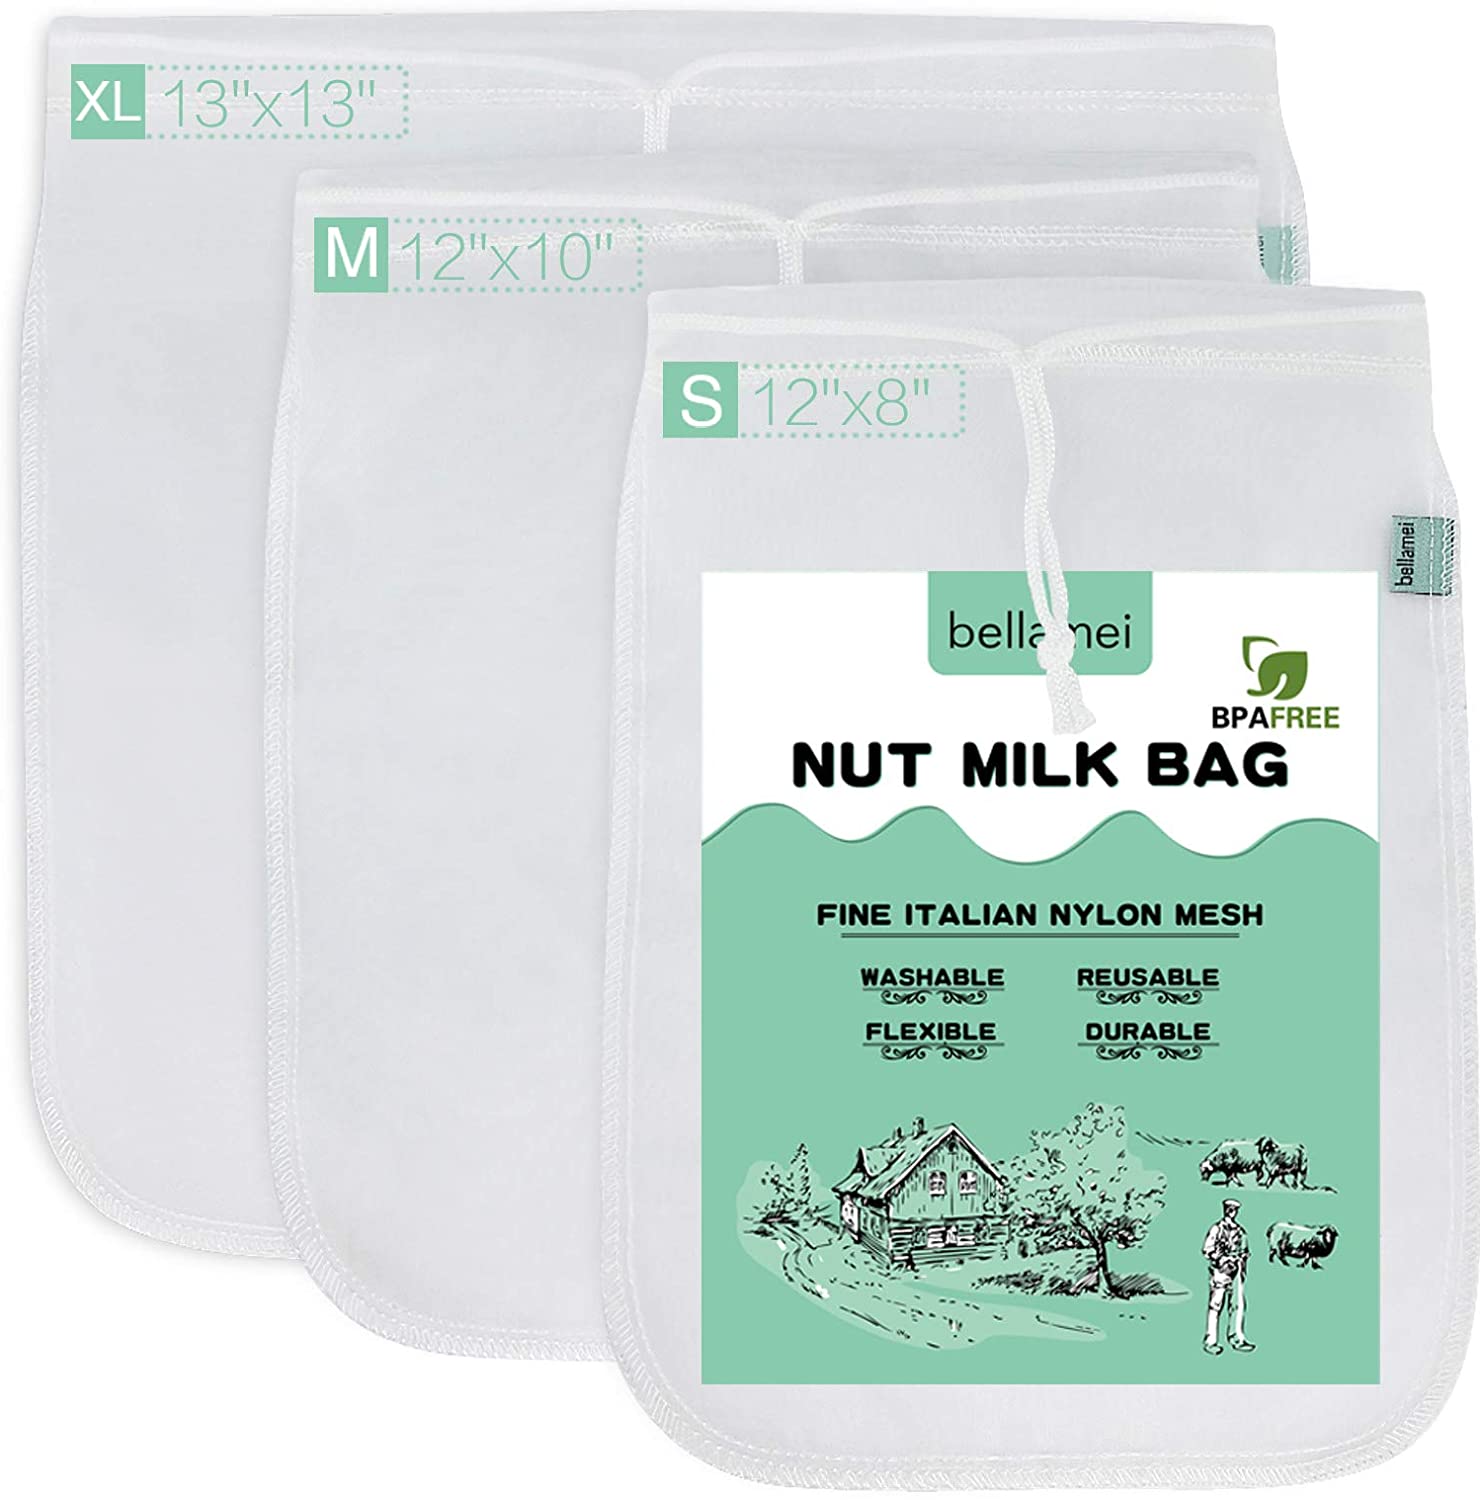 Bellamei Washable Reusable Nylon Mesh Nut Bag, 3-Pack